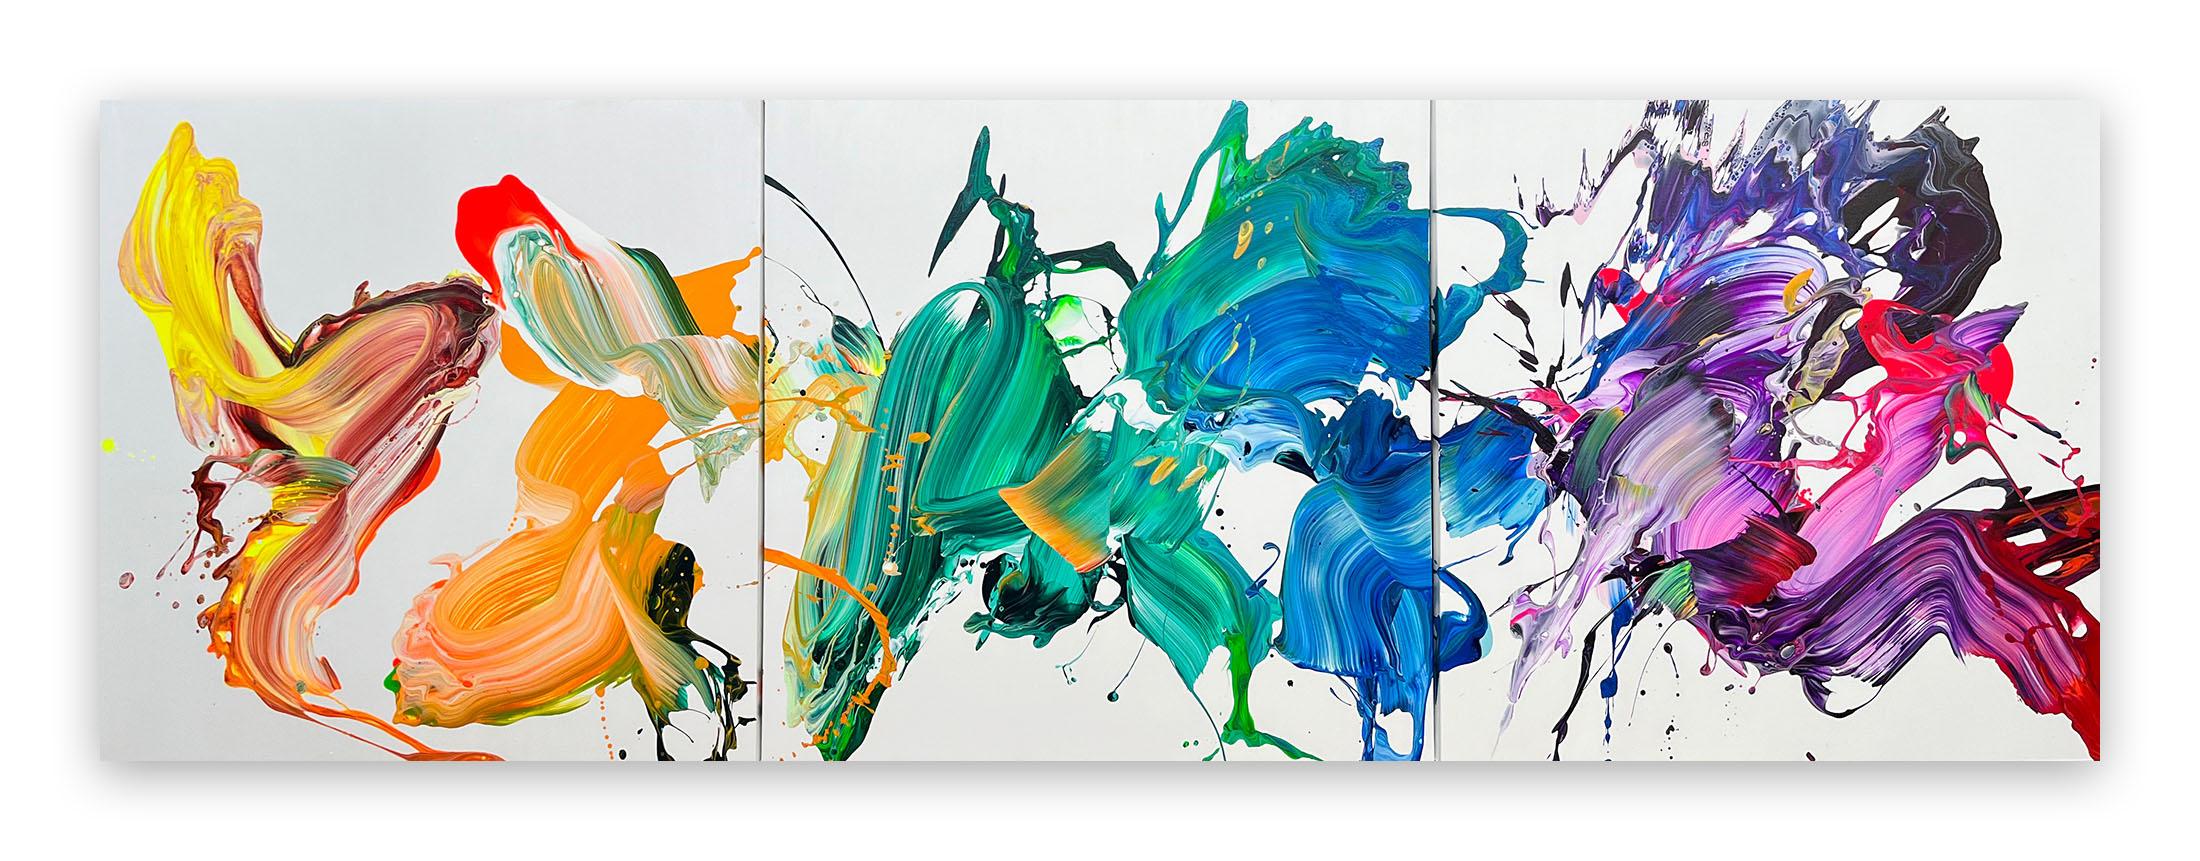 Nikolaos Schizas Abstract Painting - Universo colorido (Abstract painting)